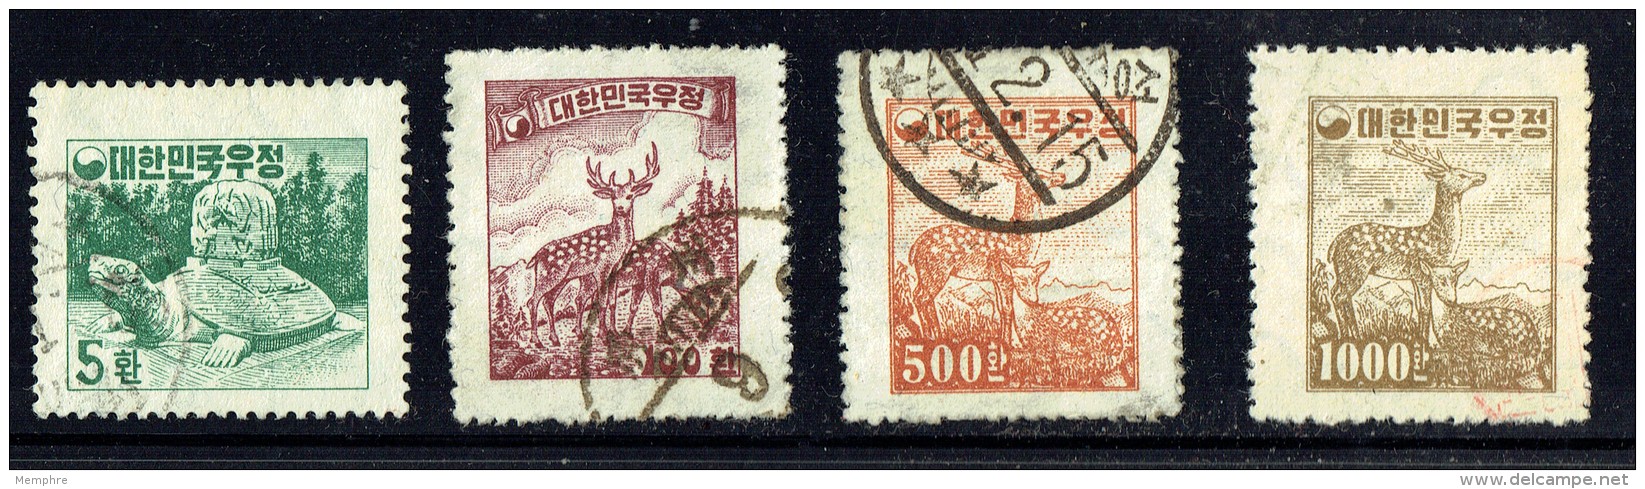 1954  New Definitives  Sc 196-9  Used - Korea (Zuid)